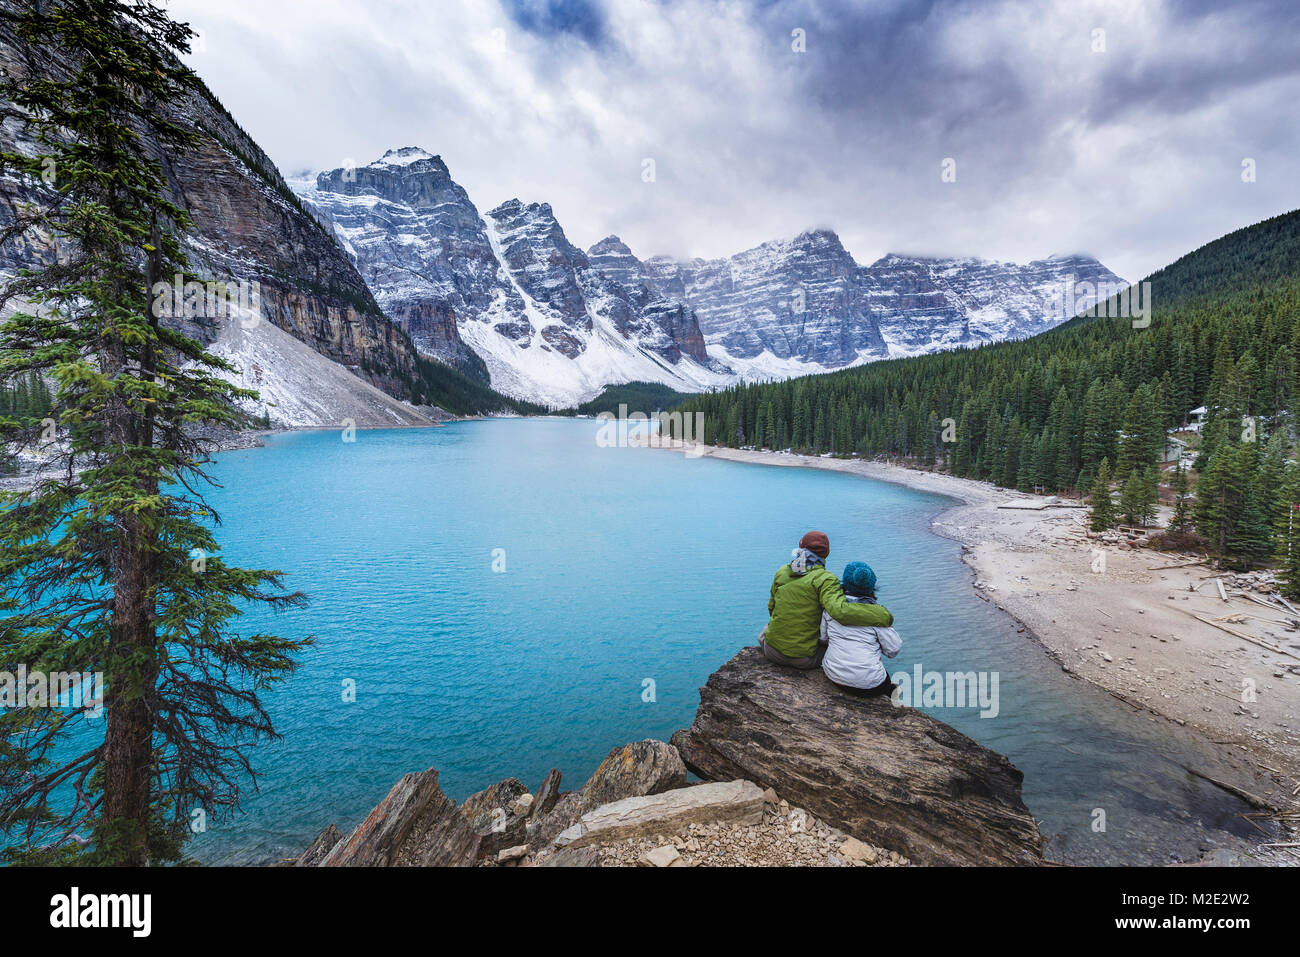 Asian couple sitting on rock admiring scenic view of mountain lake Stock Photo